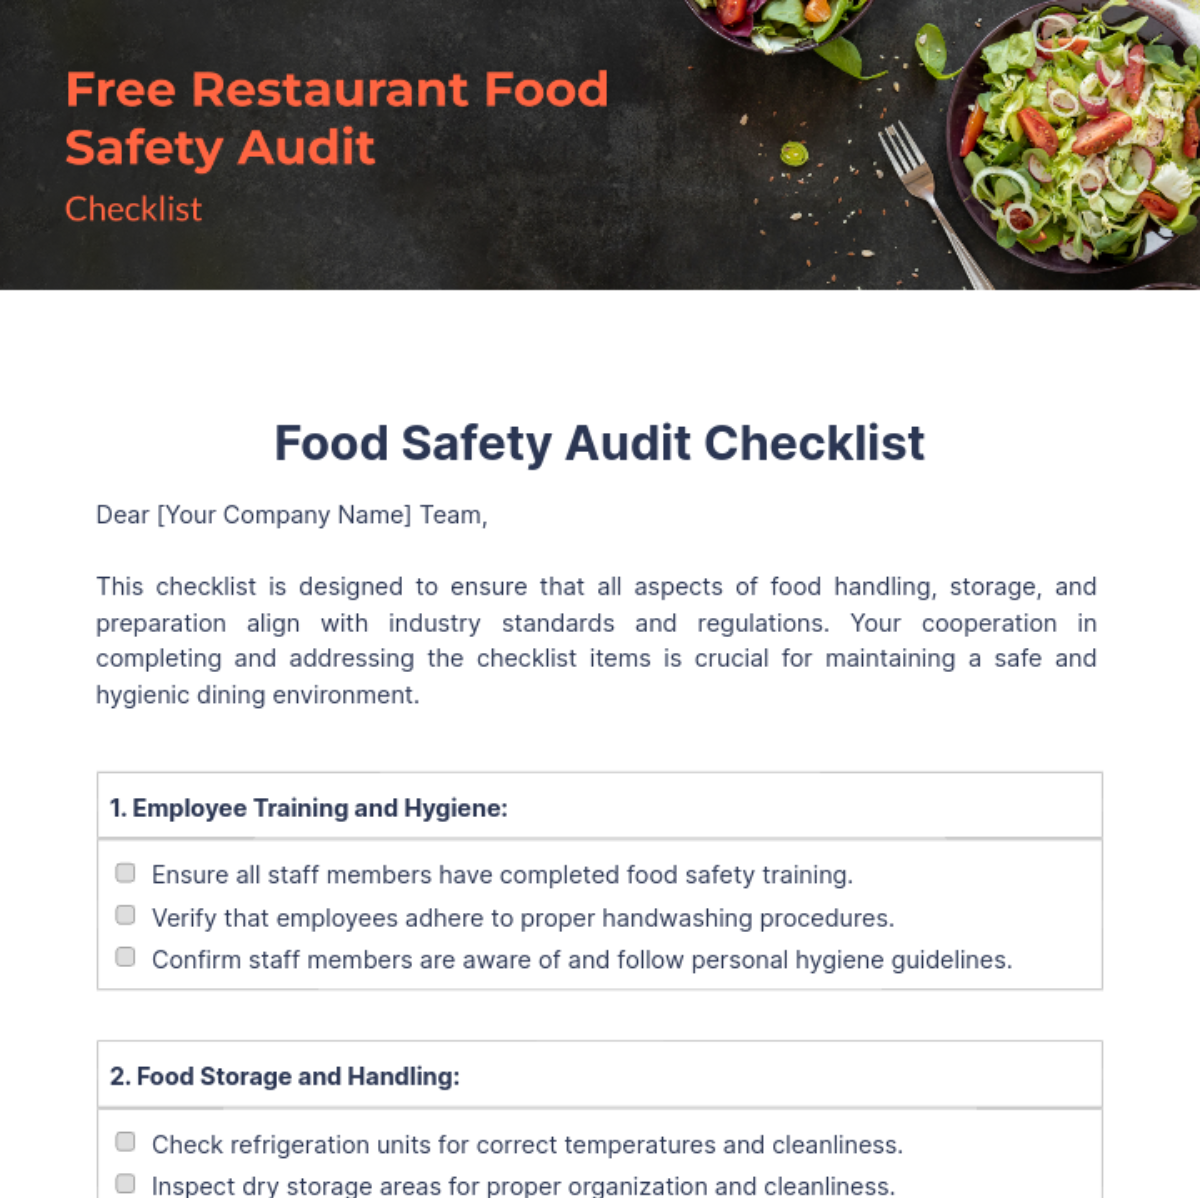 Free Restaurant Food Safety Audit Checklist Template